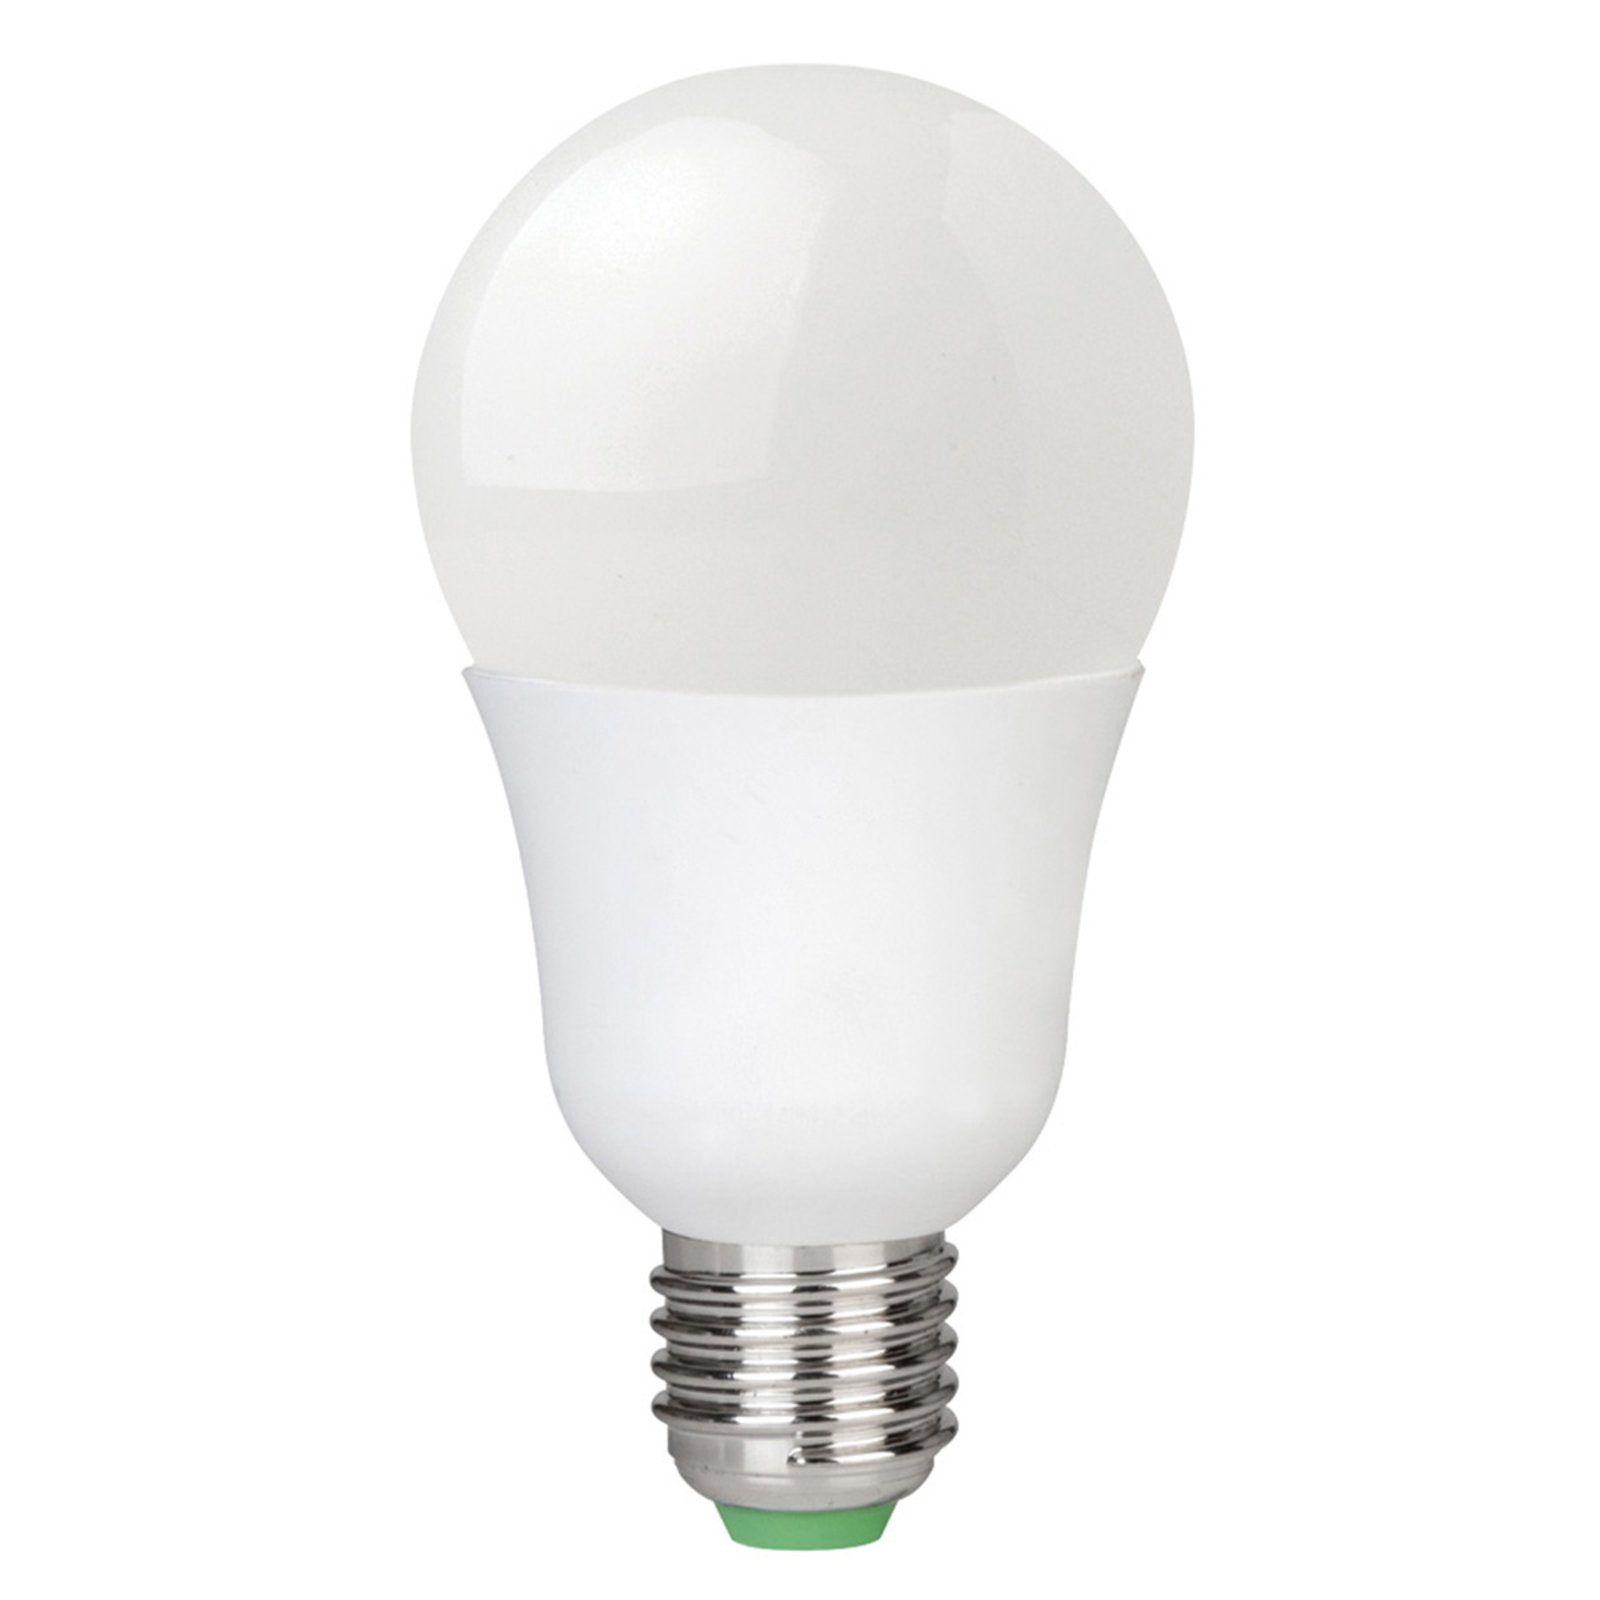 E27 11 W 828 bombilla LED MEGAMAN Smart Lighting